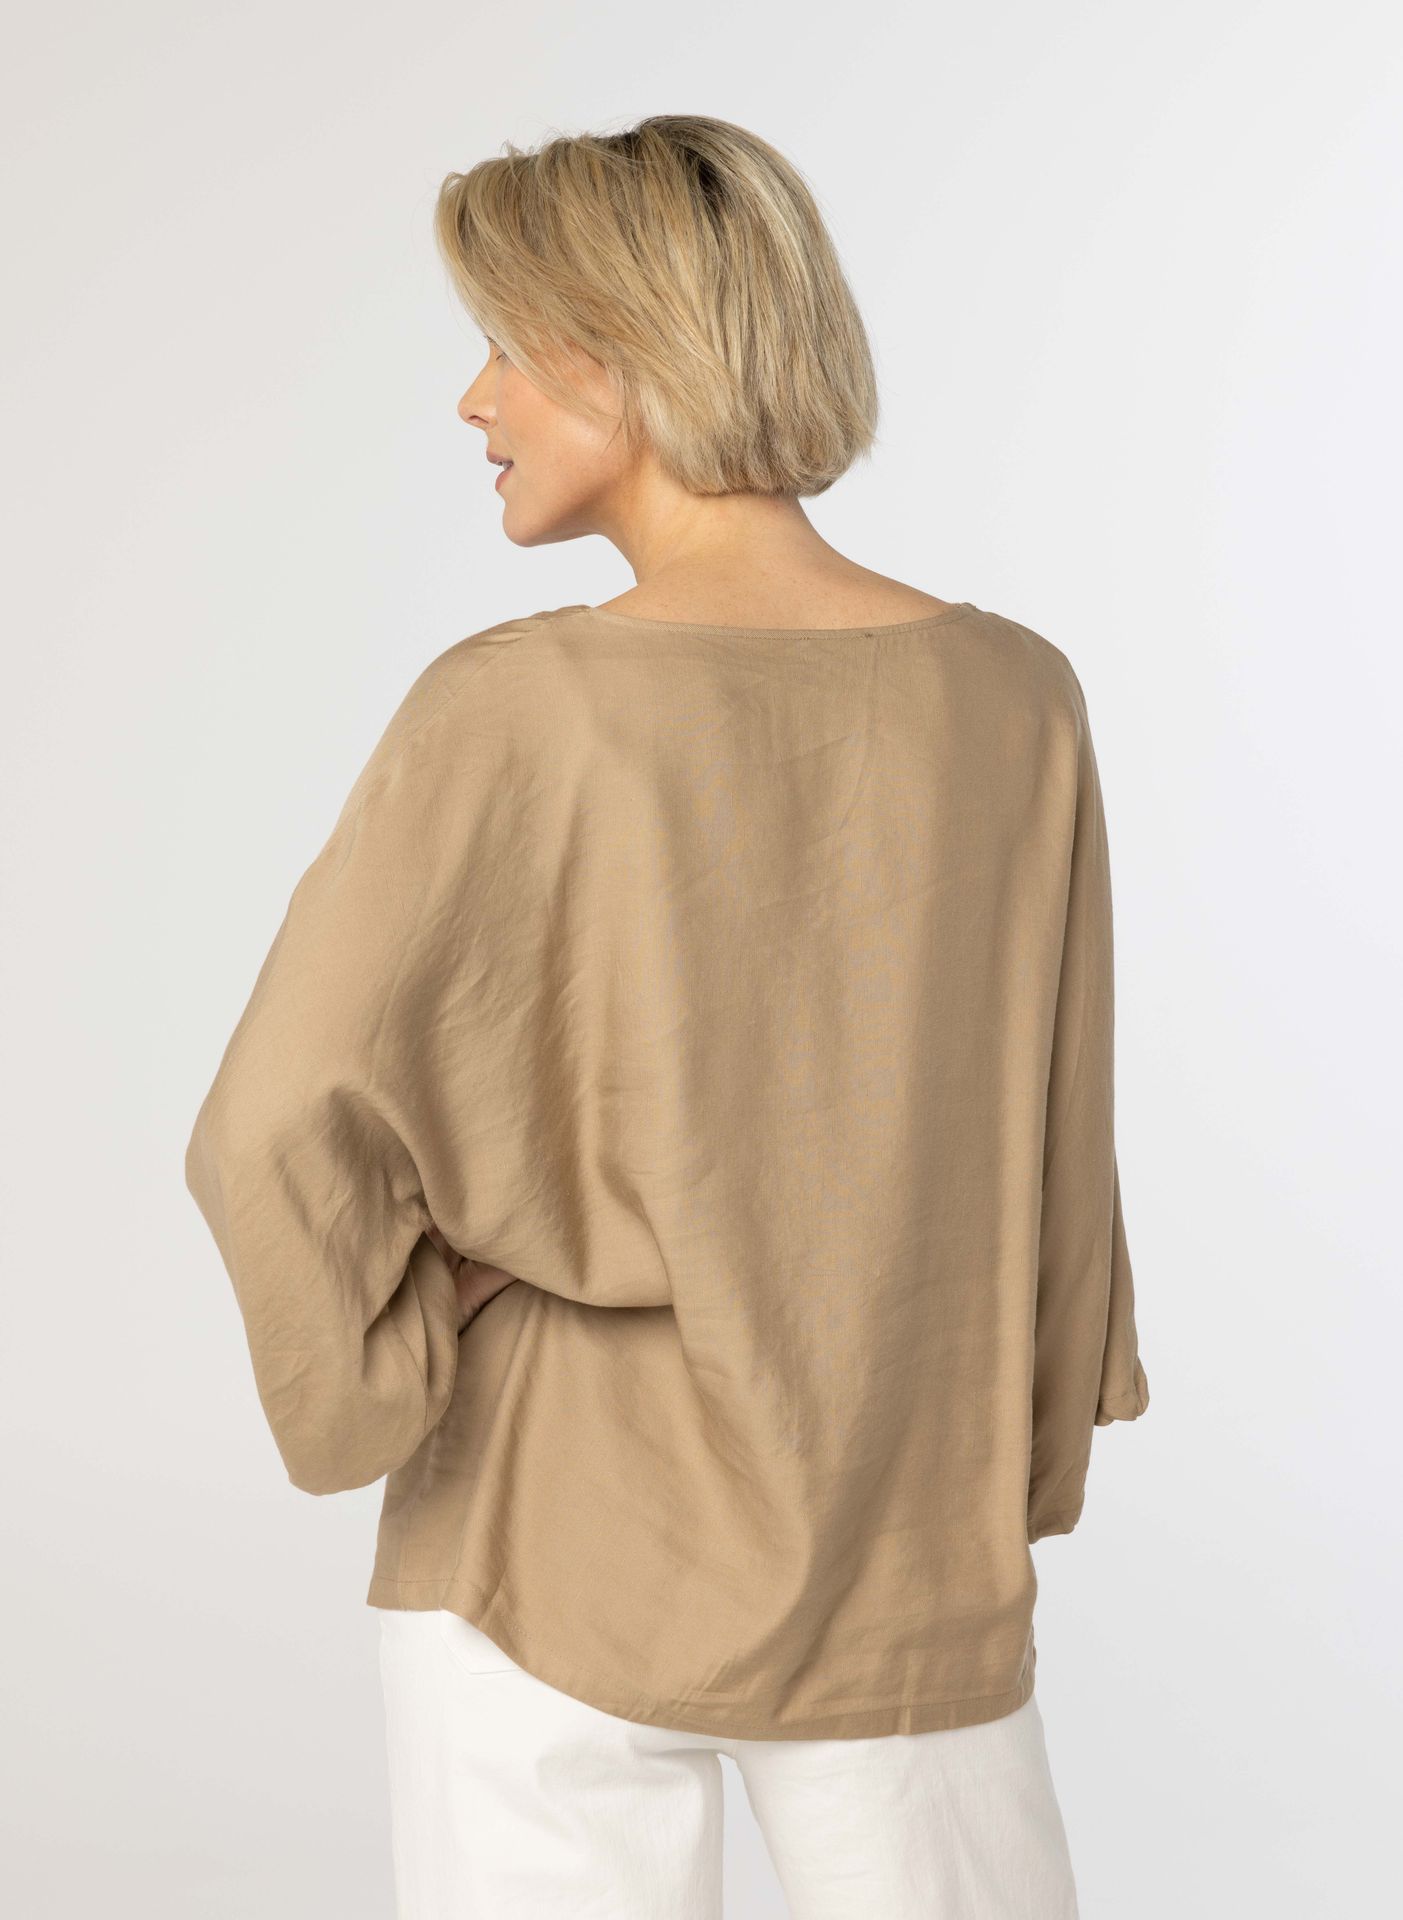 Norah Zandkleurige blouse linnen sand 212673-110